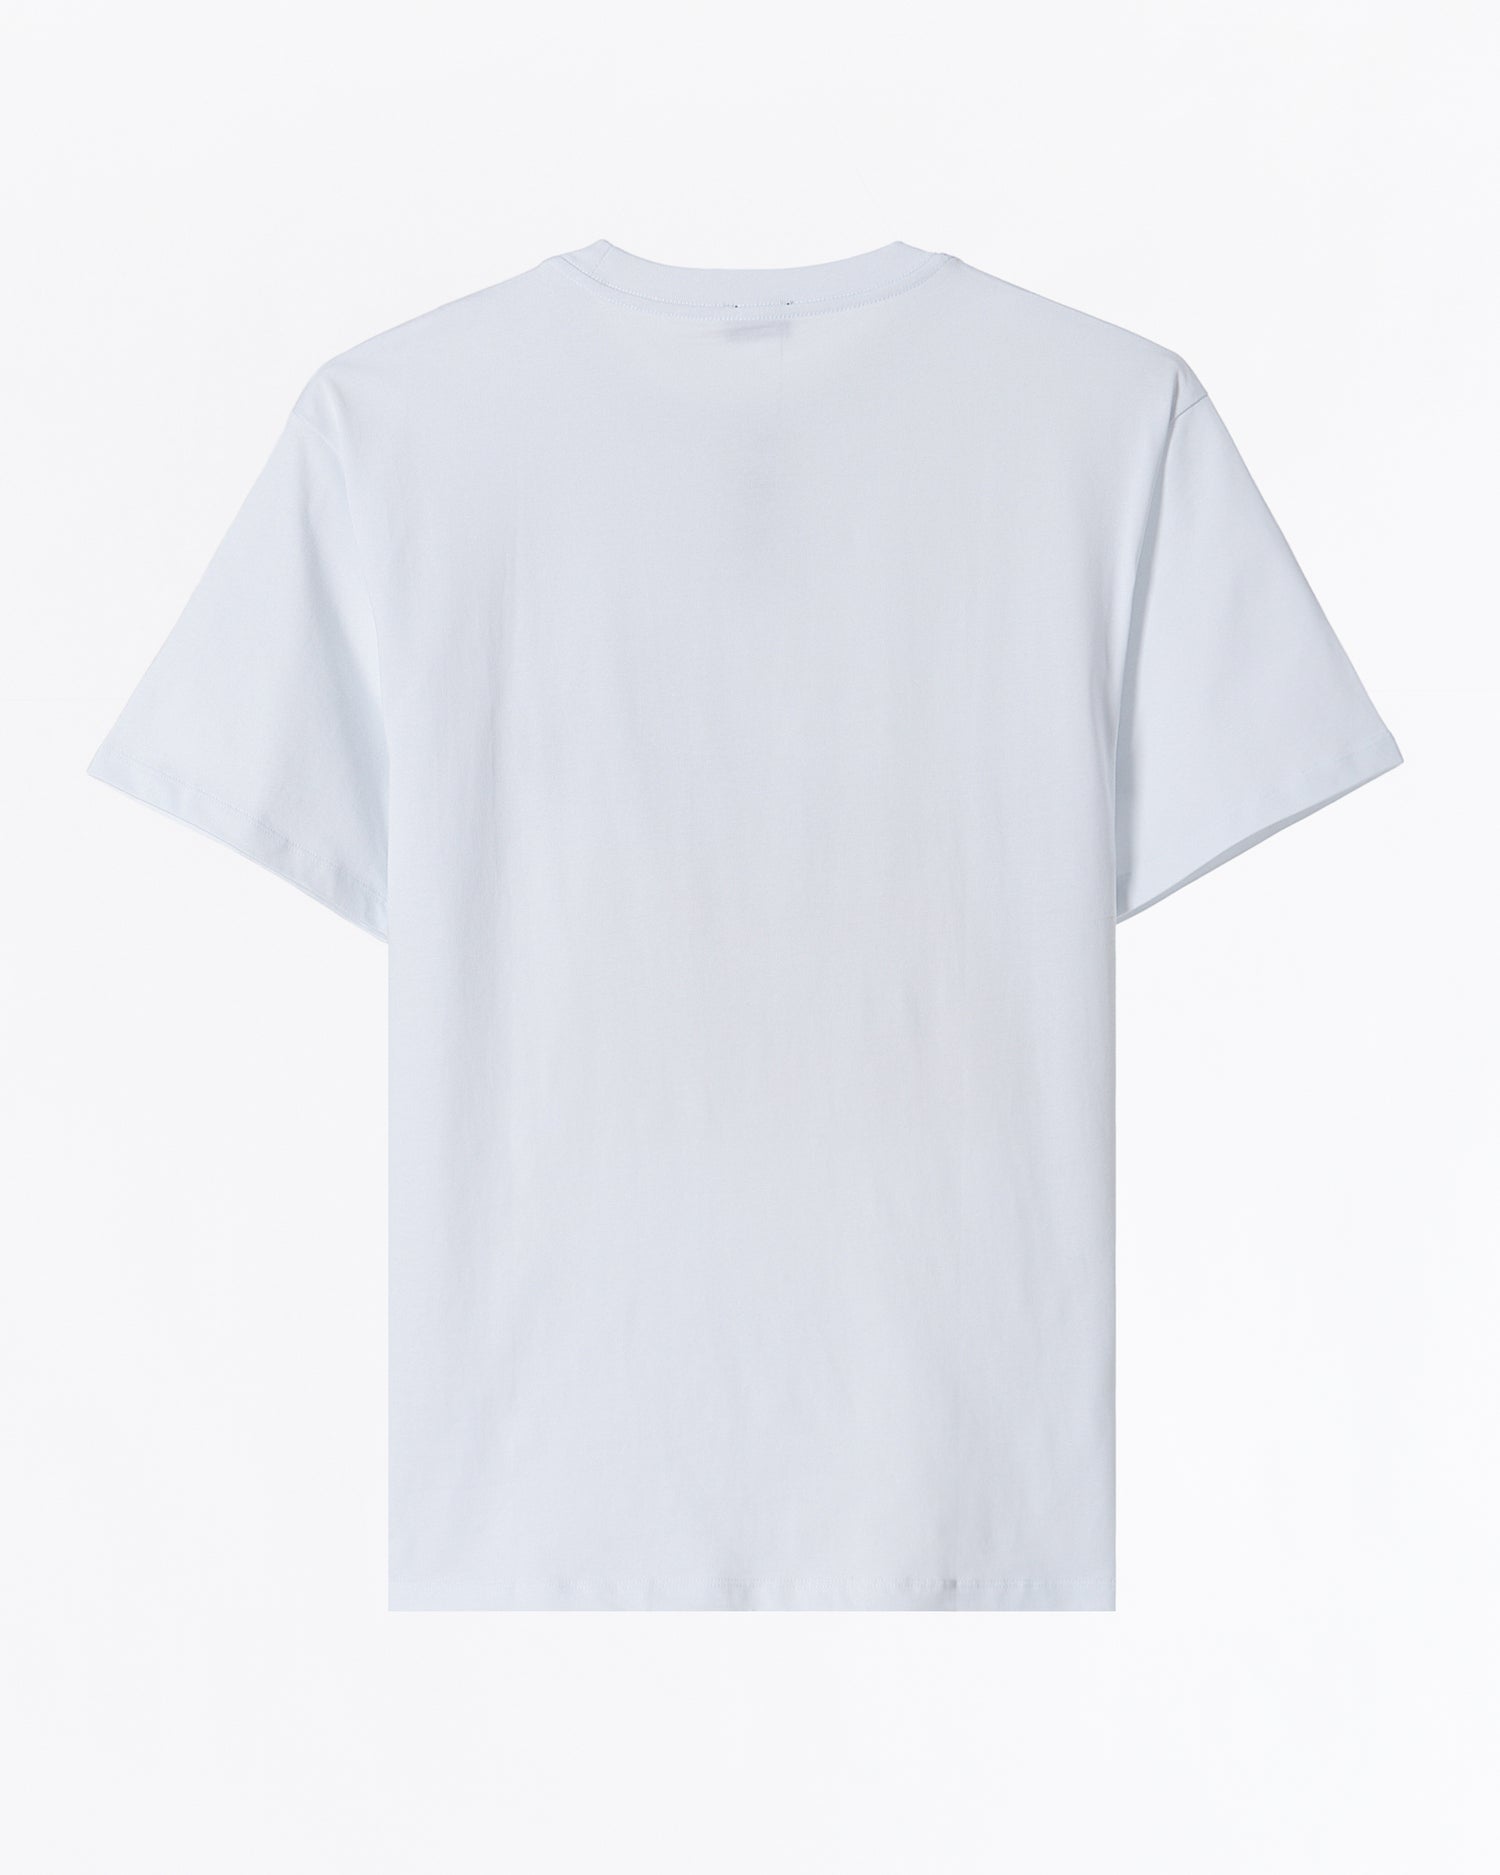 FEN Teddy Bear Printed Unisex White T-Shirt 20.90